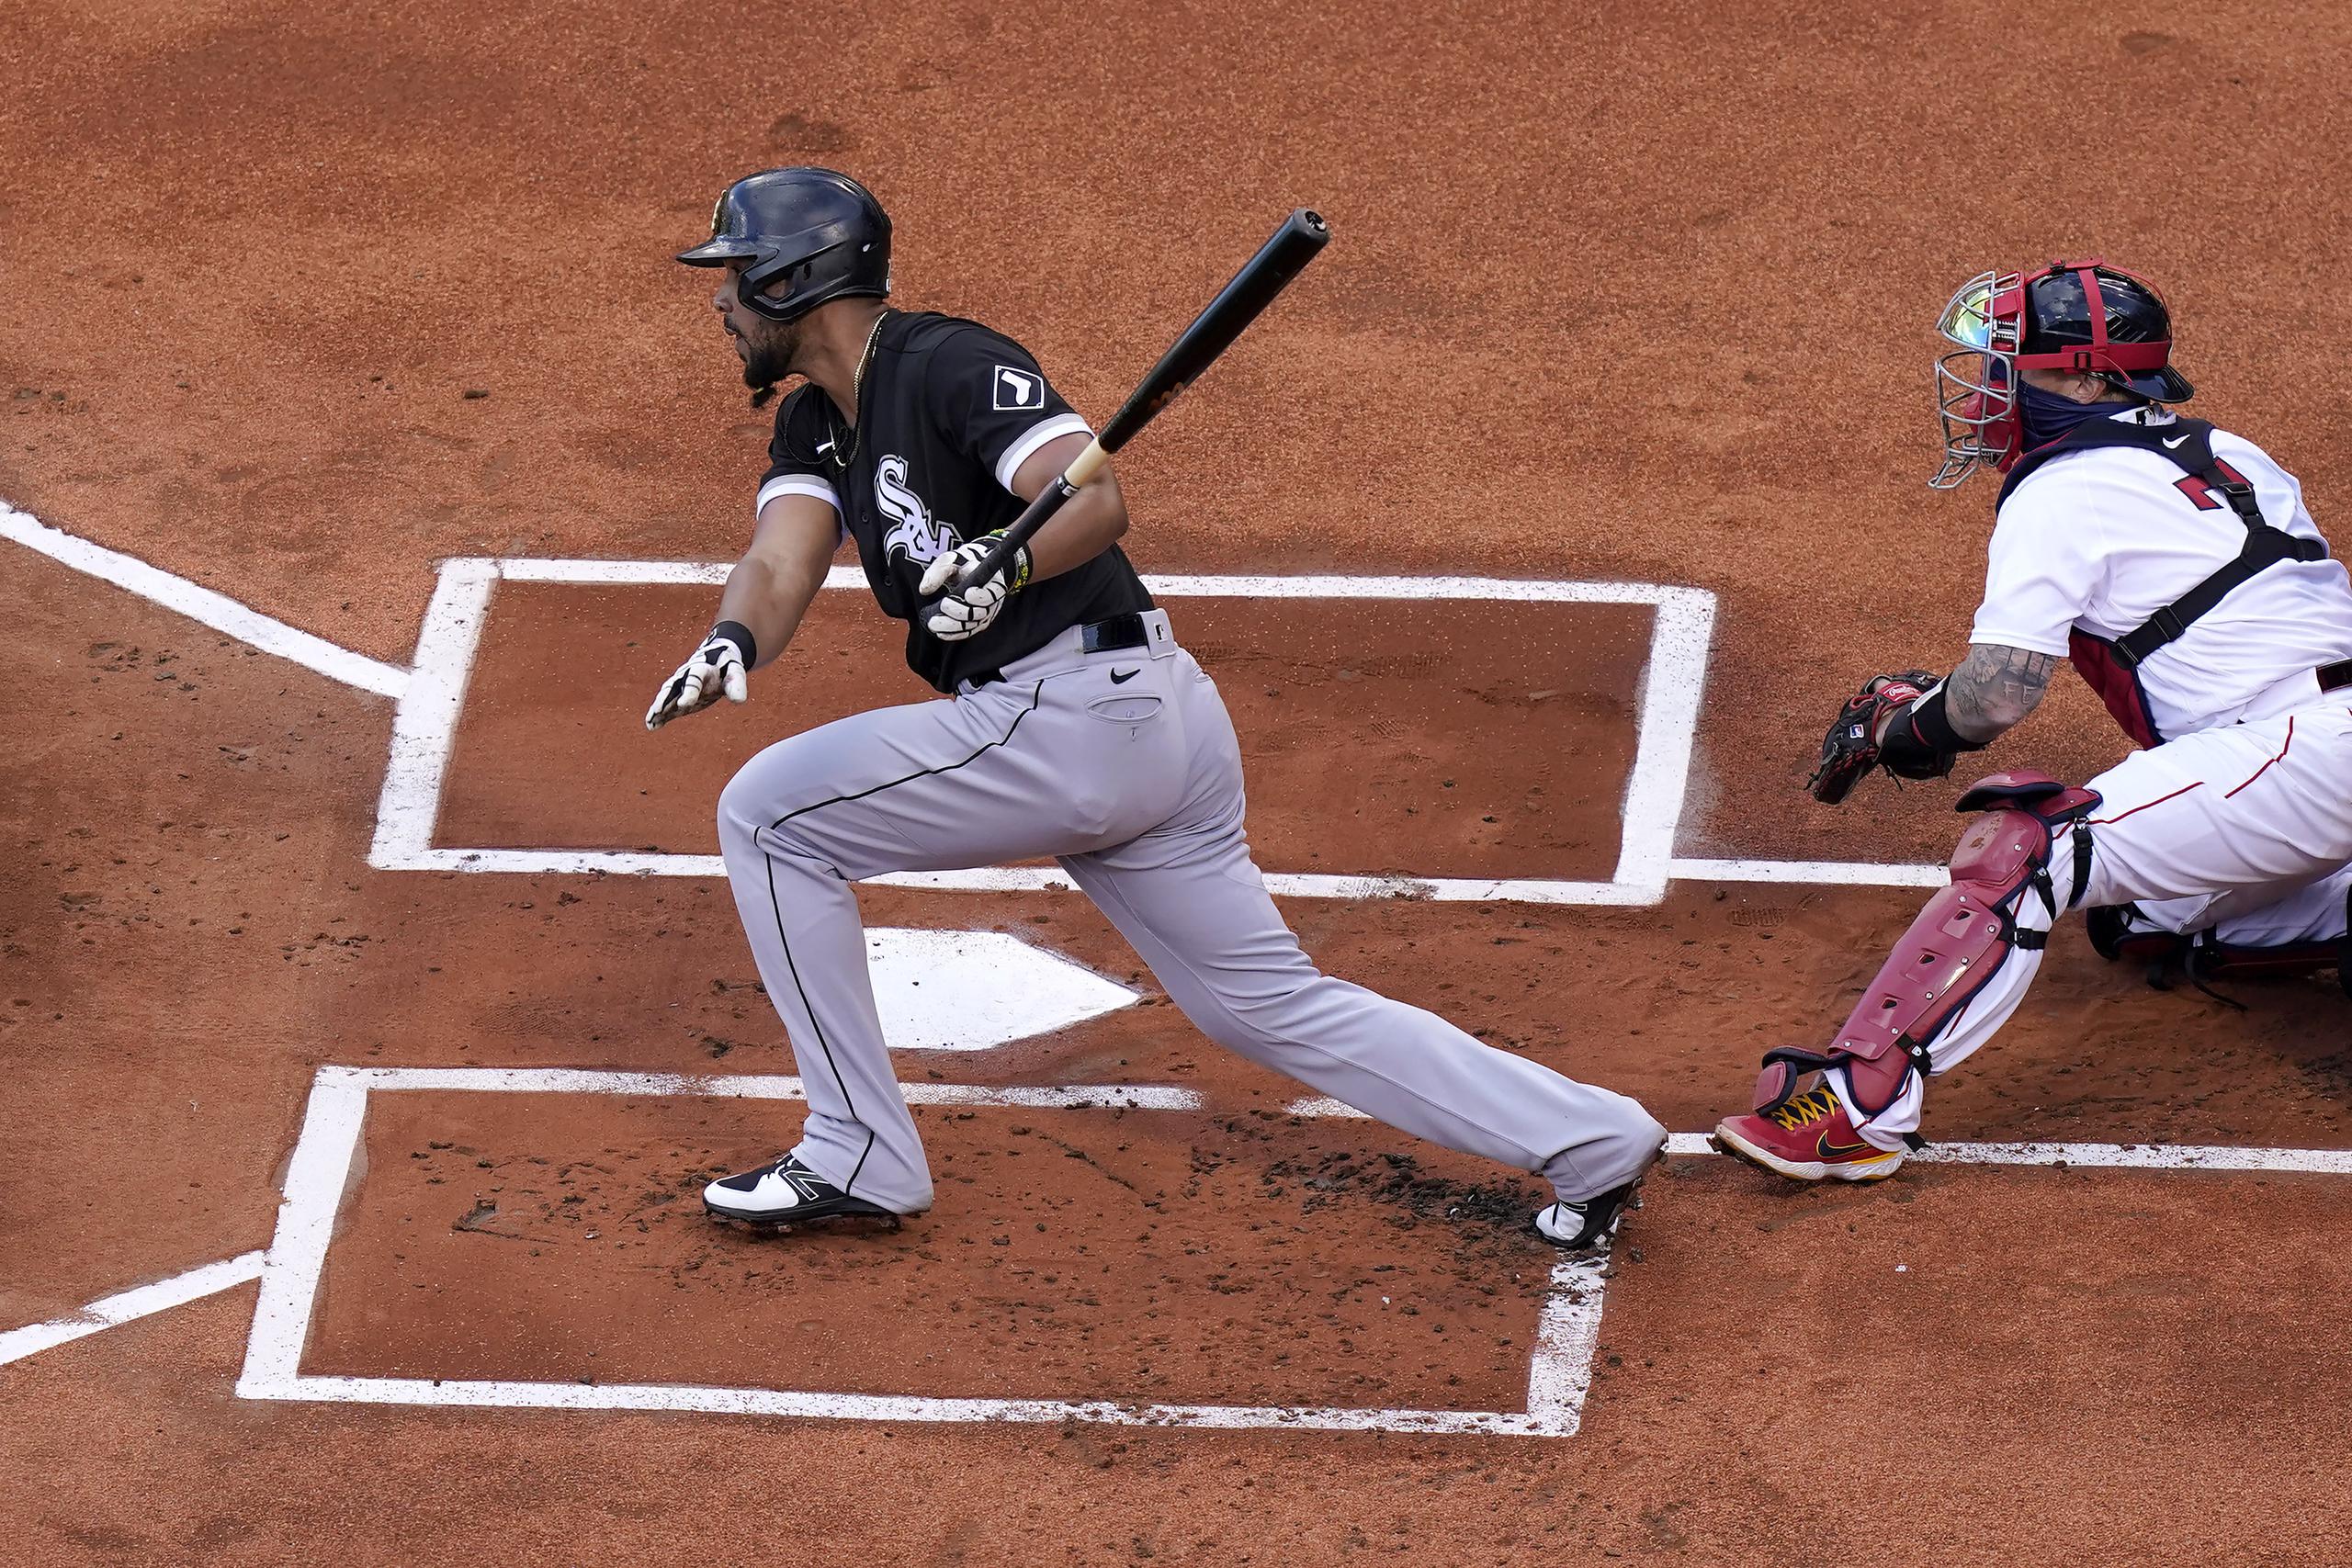 El cubano José Abreu, de los White Sox, dispara un batazo mientras observa el boricua de los Red Sox, Christian Vázquez.